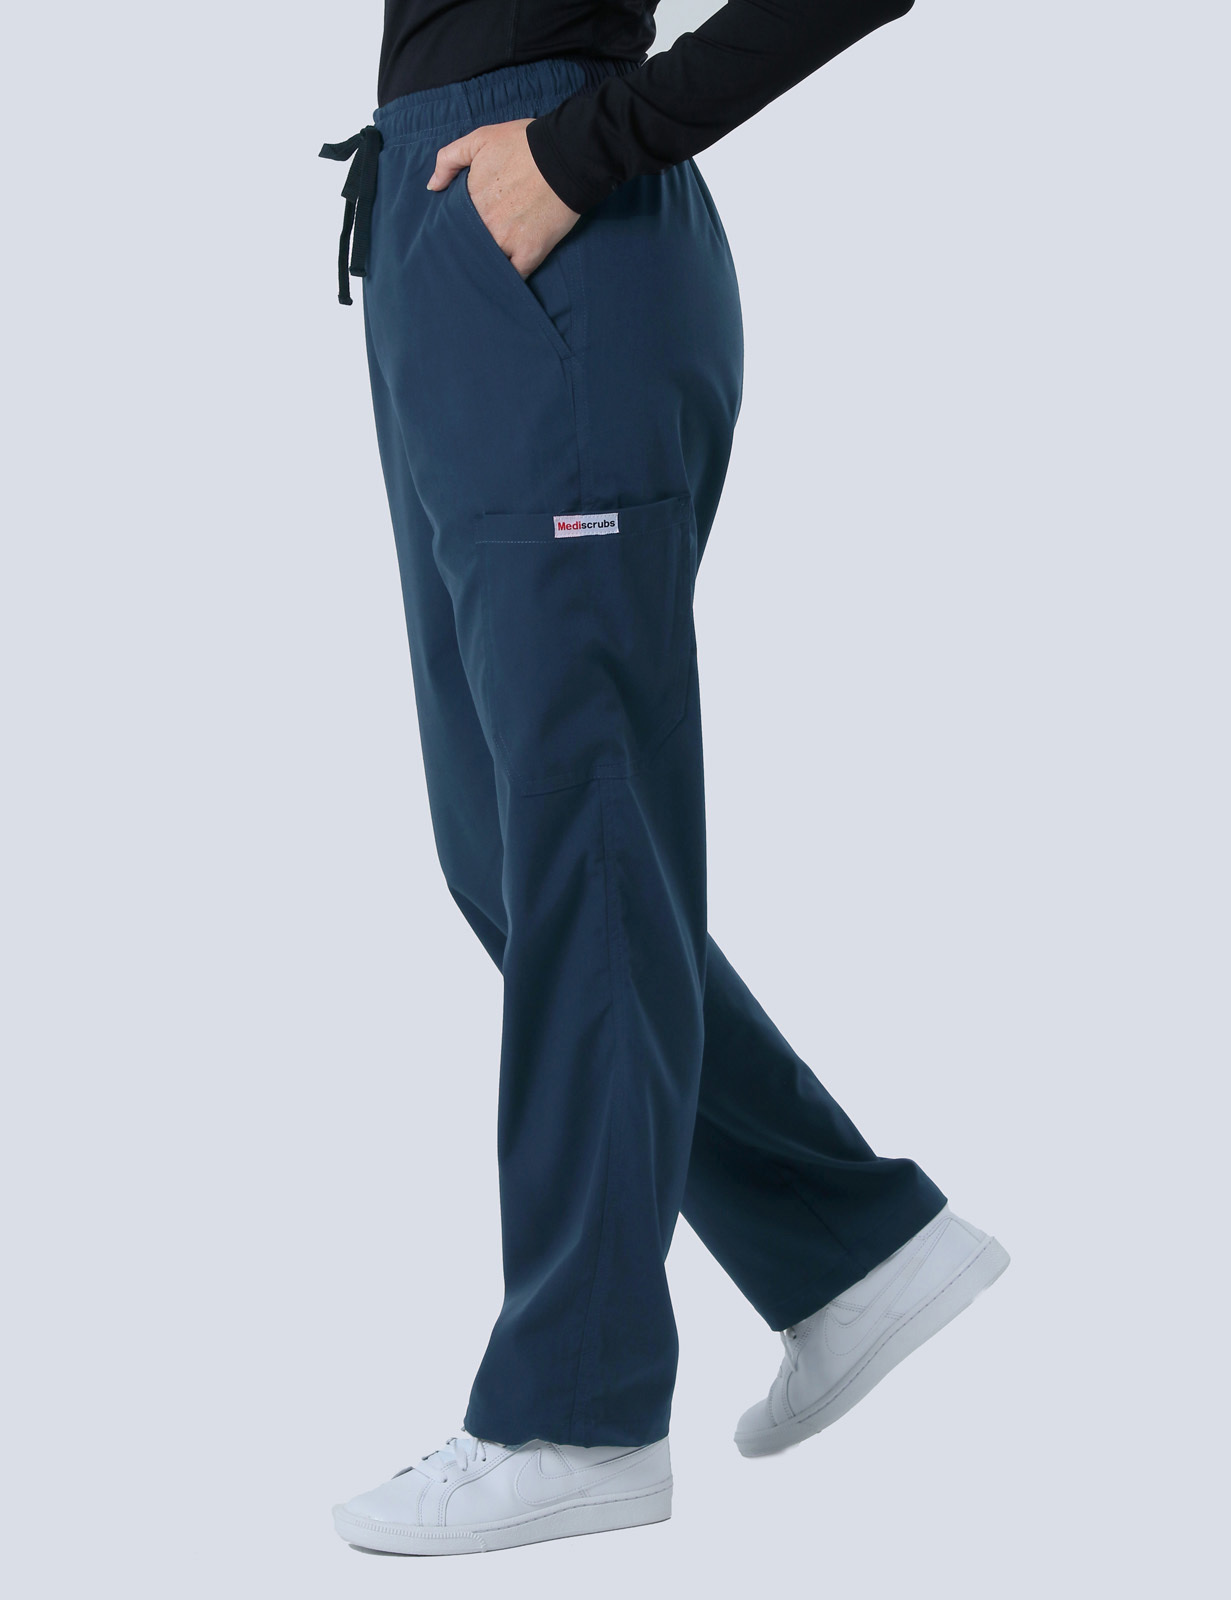 Regional Queensland Nurse Unit Manager Uniform Set Bundle (Women's Fit Solid Top and Cargo Pants in Navy incl Logos)